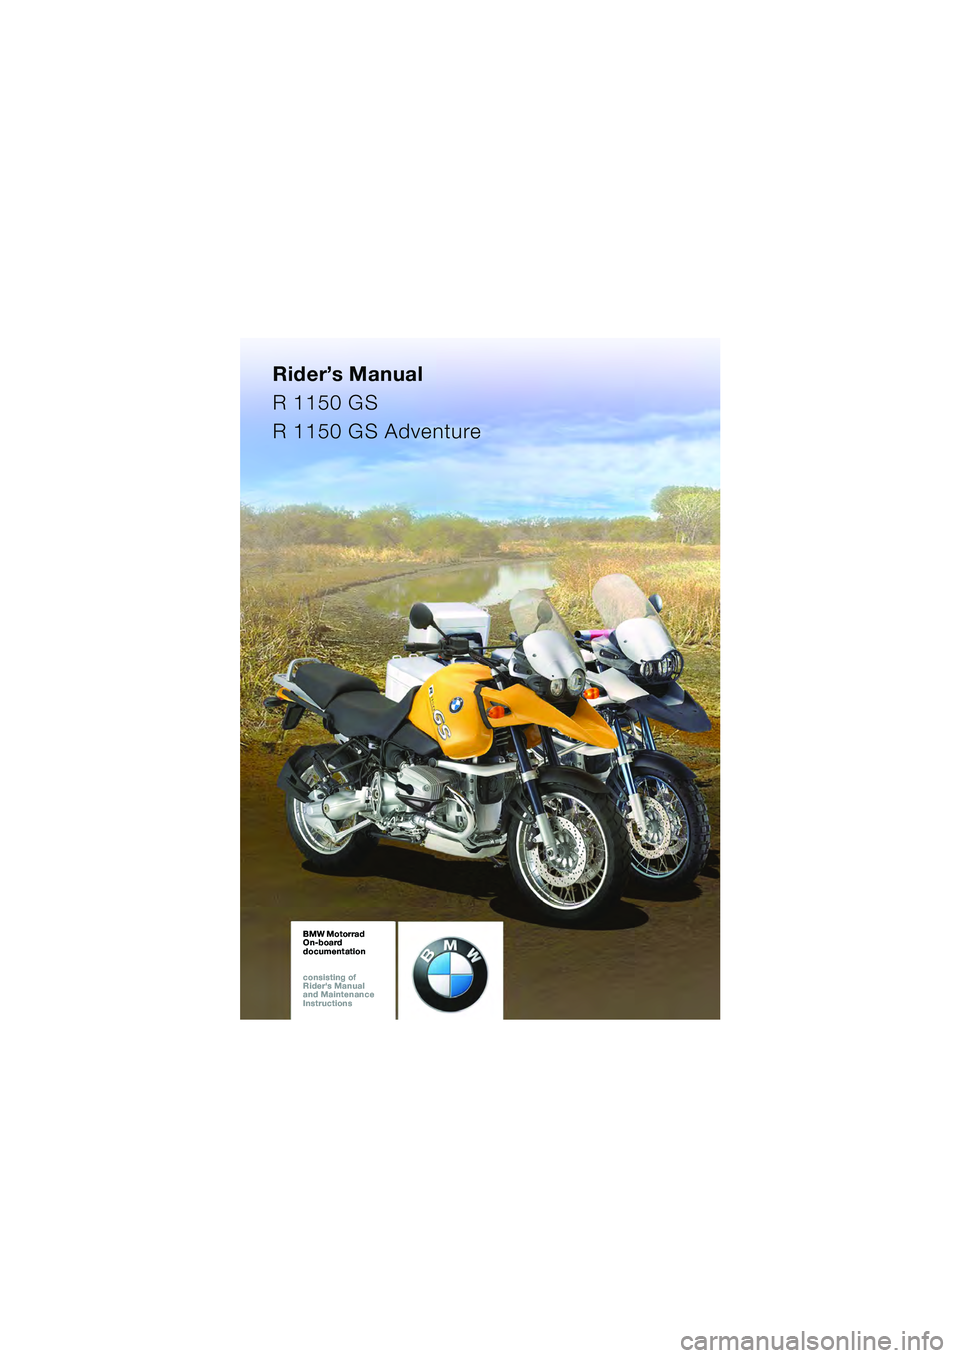 BMW MOTORRAD R 1150 GS 2002  Riders Manual (in English) Rider’s Manual
R 1150 GS
R 1150 GS Adventure
BMW Motorrad
On-board  
documentation
consisting of  
Riders Manual  
and Maintenance  
InstructionsBMW Motorrad
On-board  
documentation
consisting of 